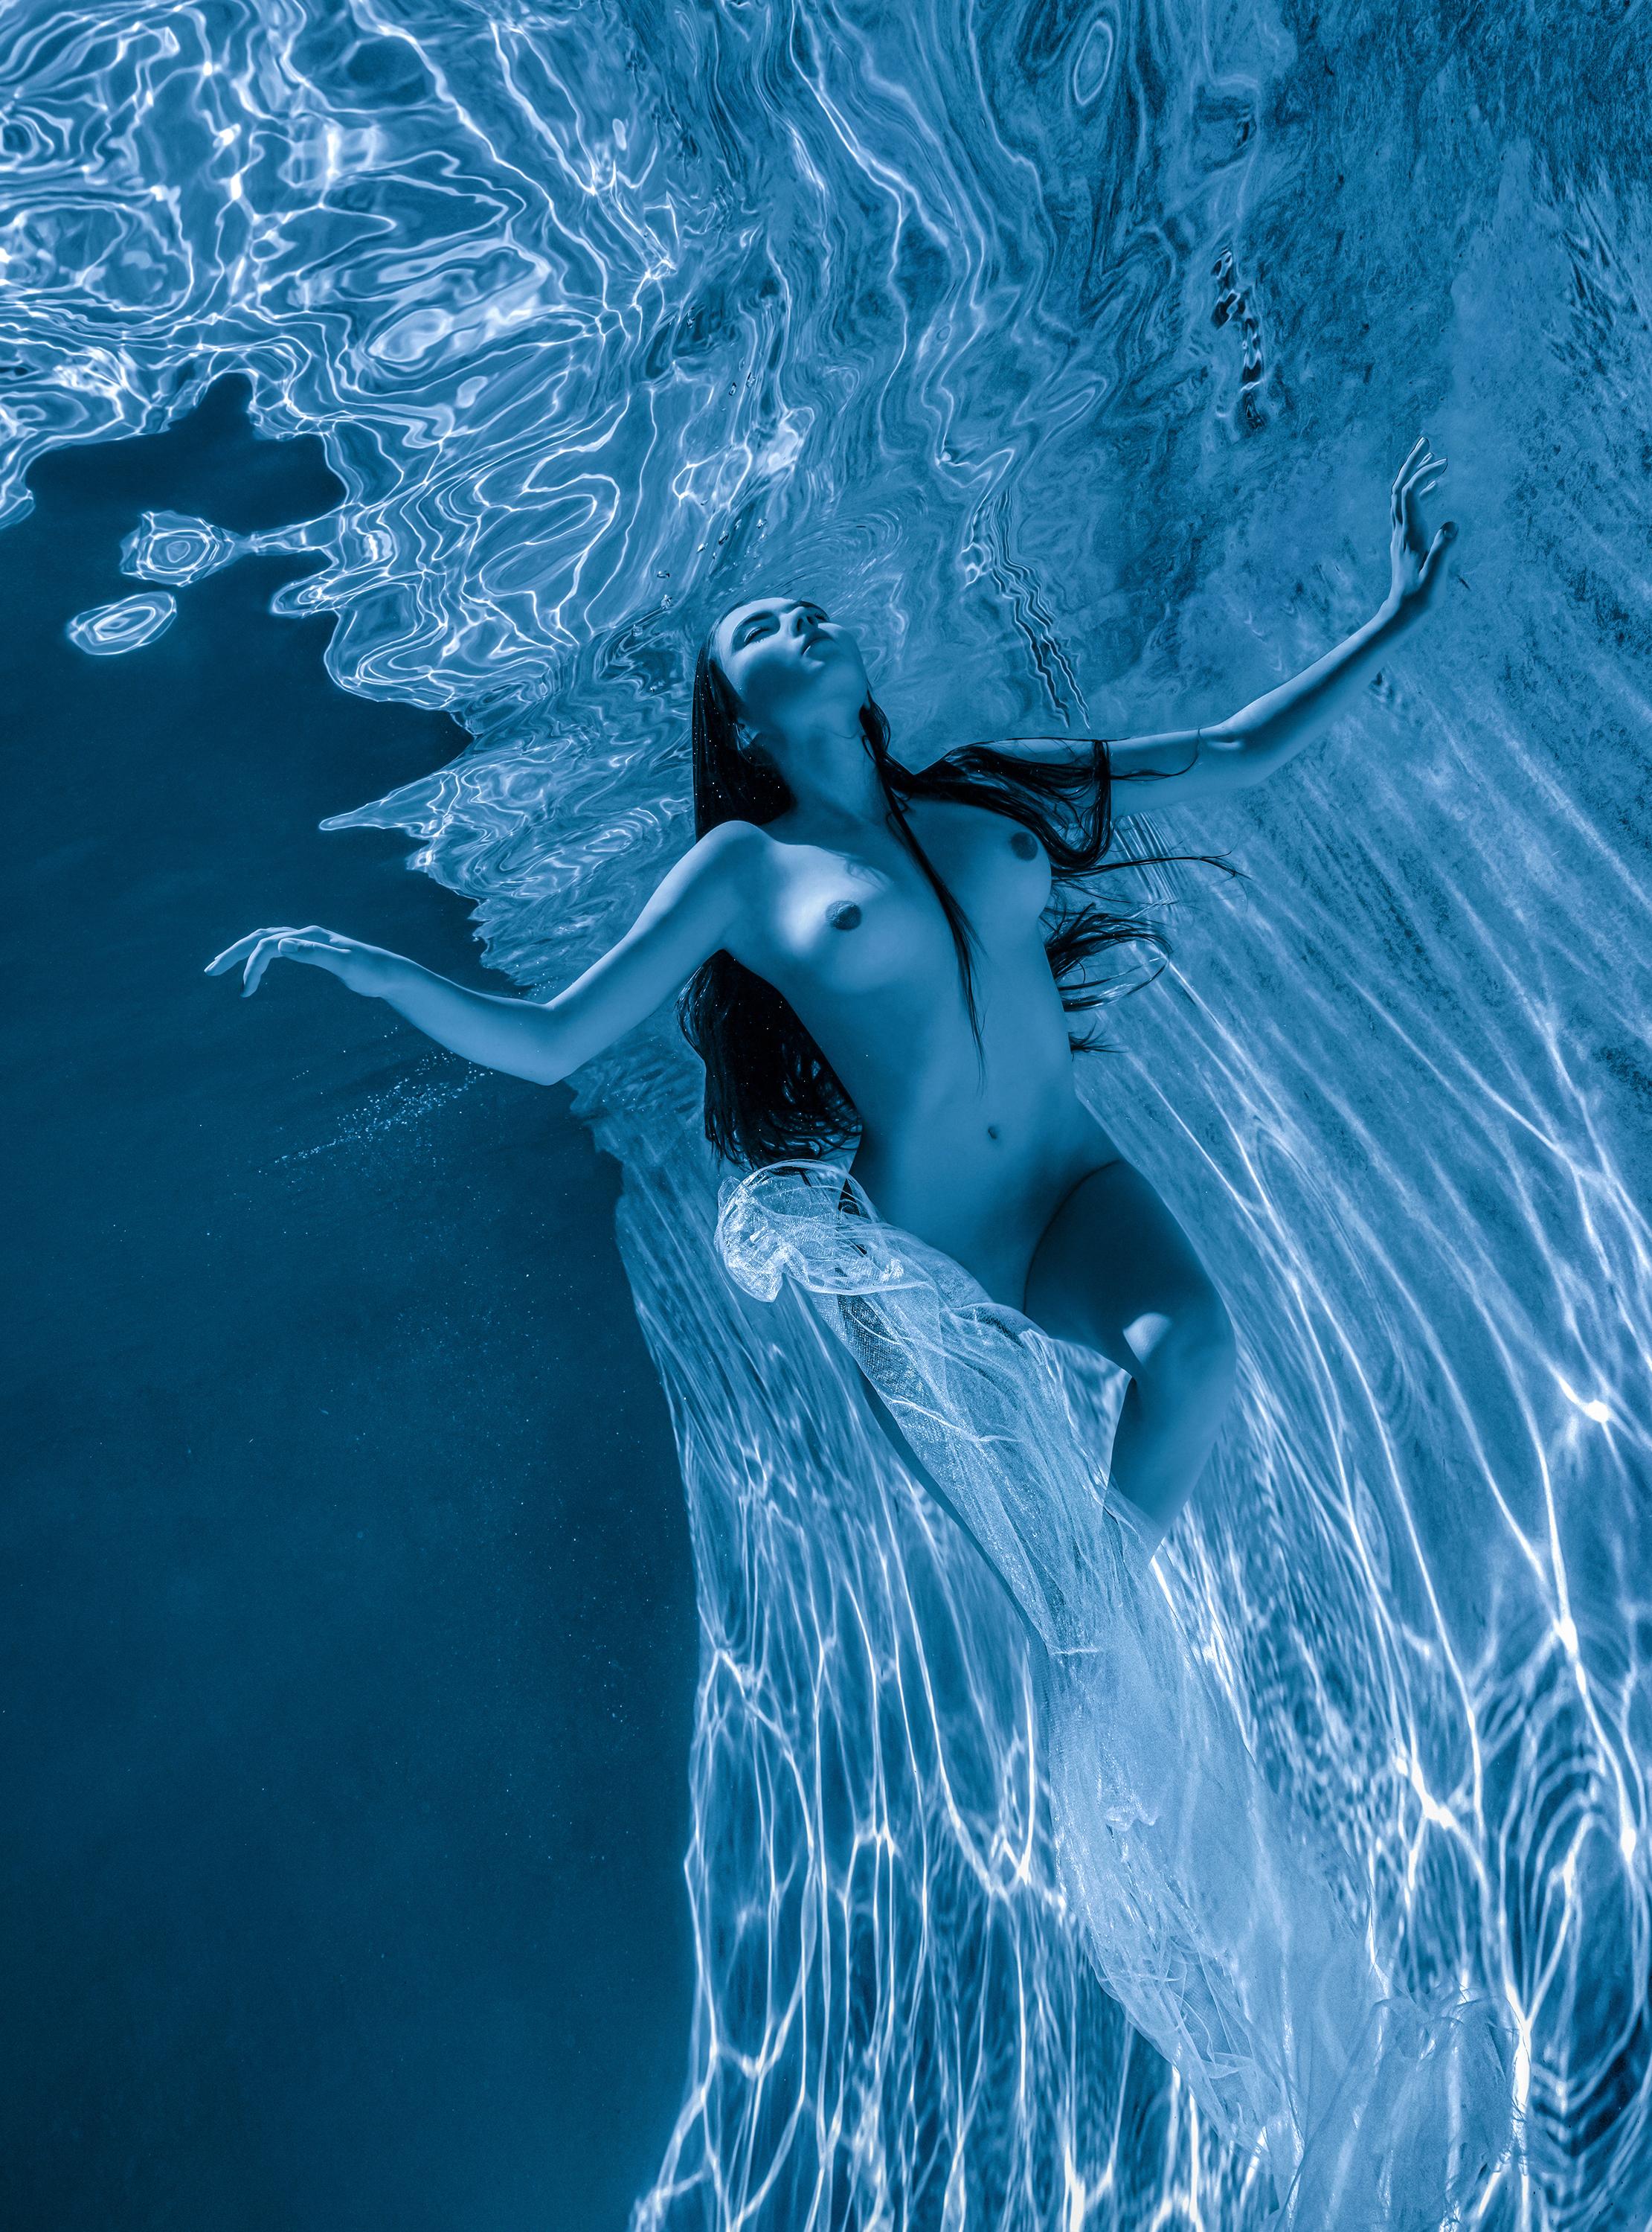 Alex Sher Figurative Photograph - Freediver - underwater nude photograph - archival pigment print 24x18"